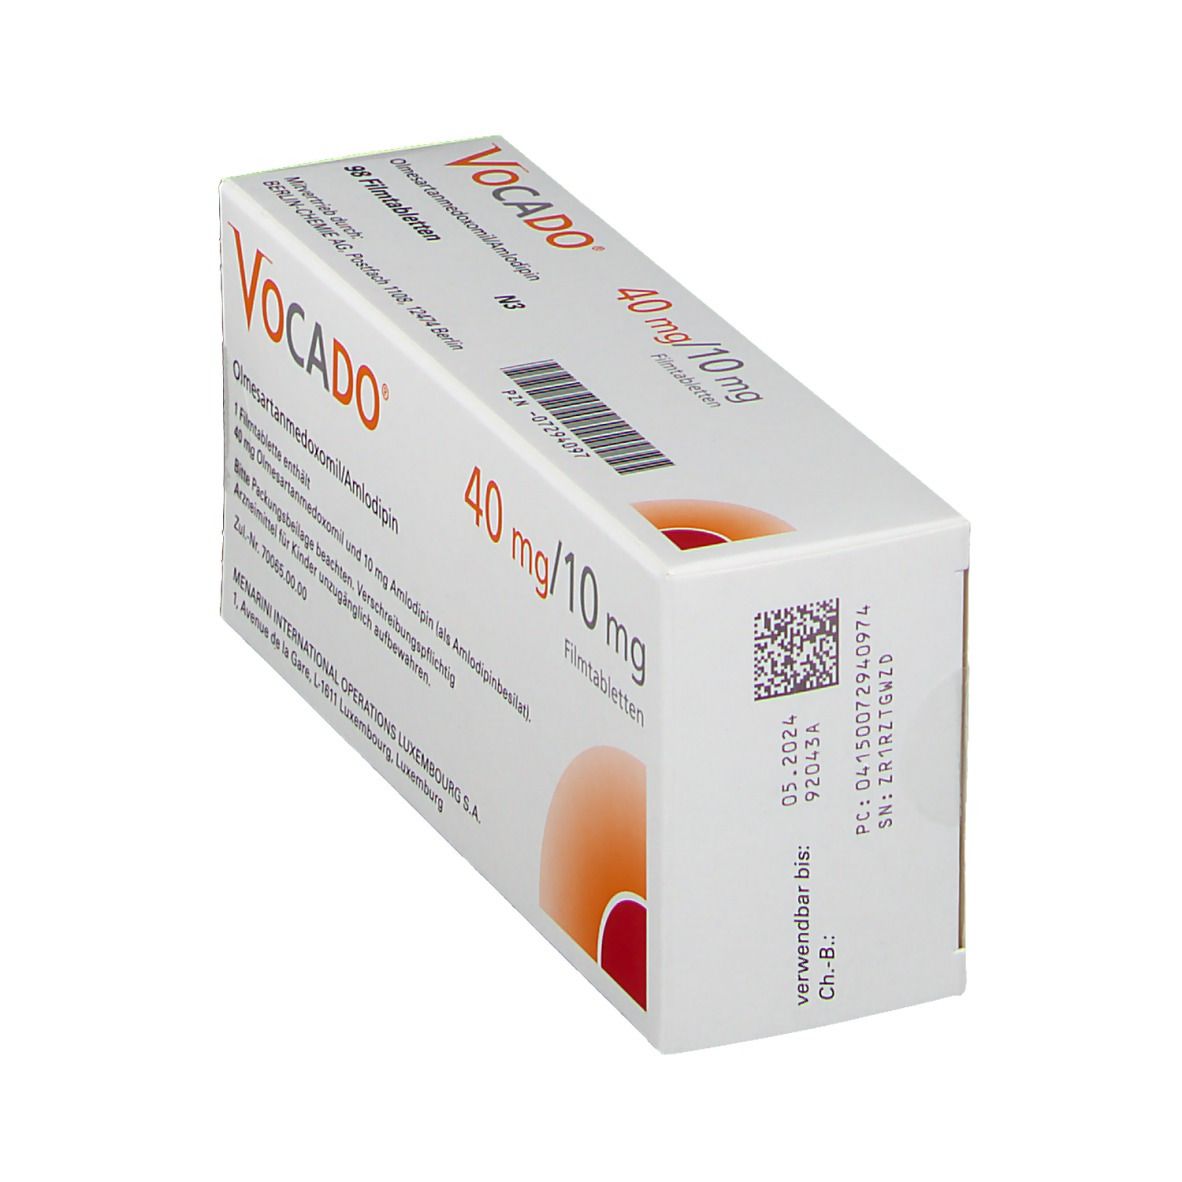 Vocado® 40 mg/10 mg